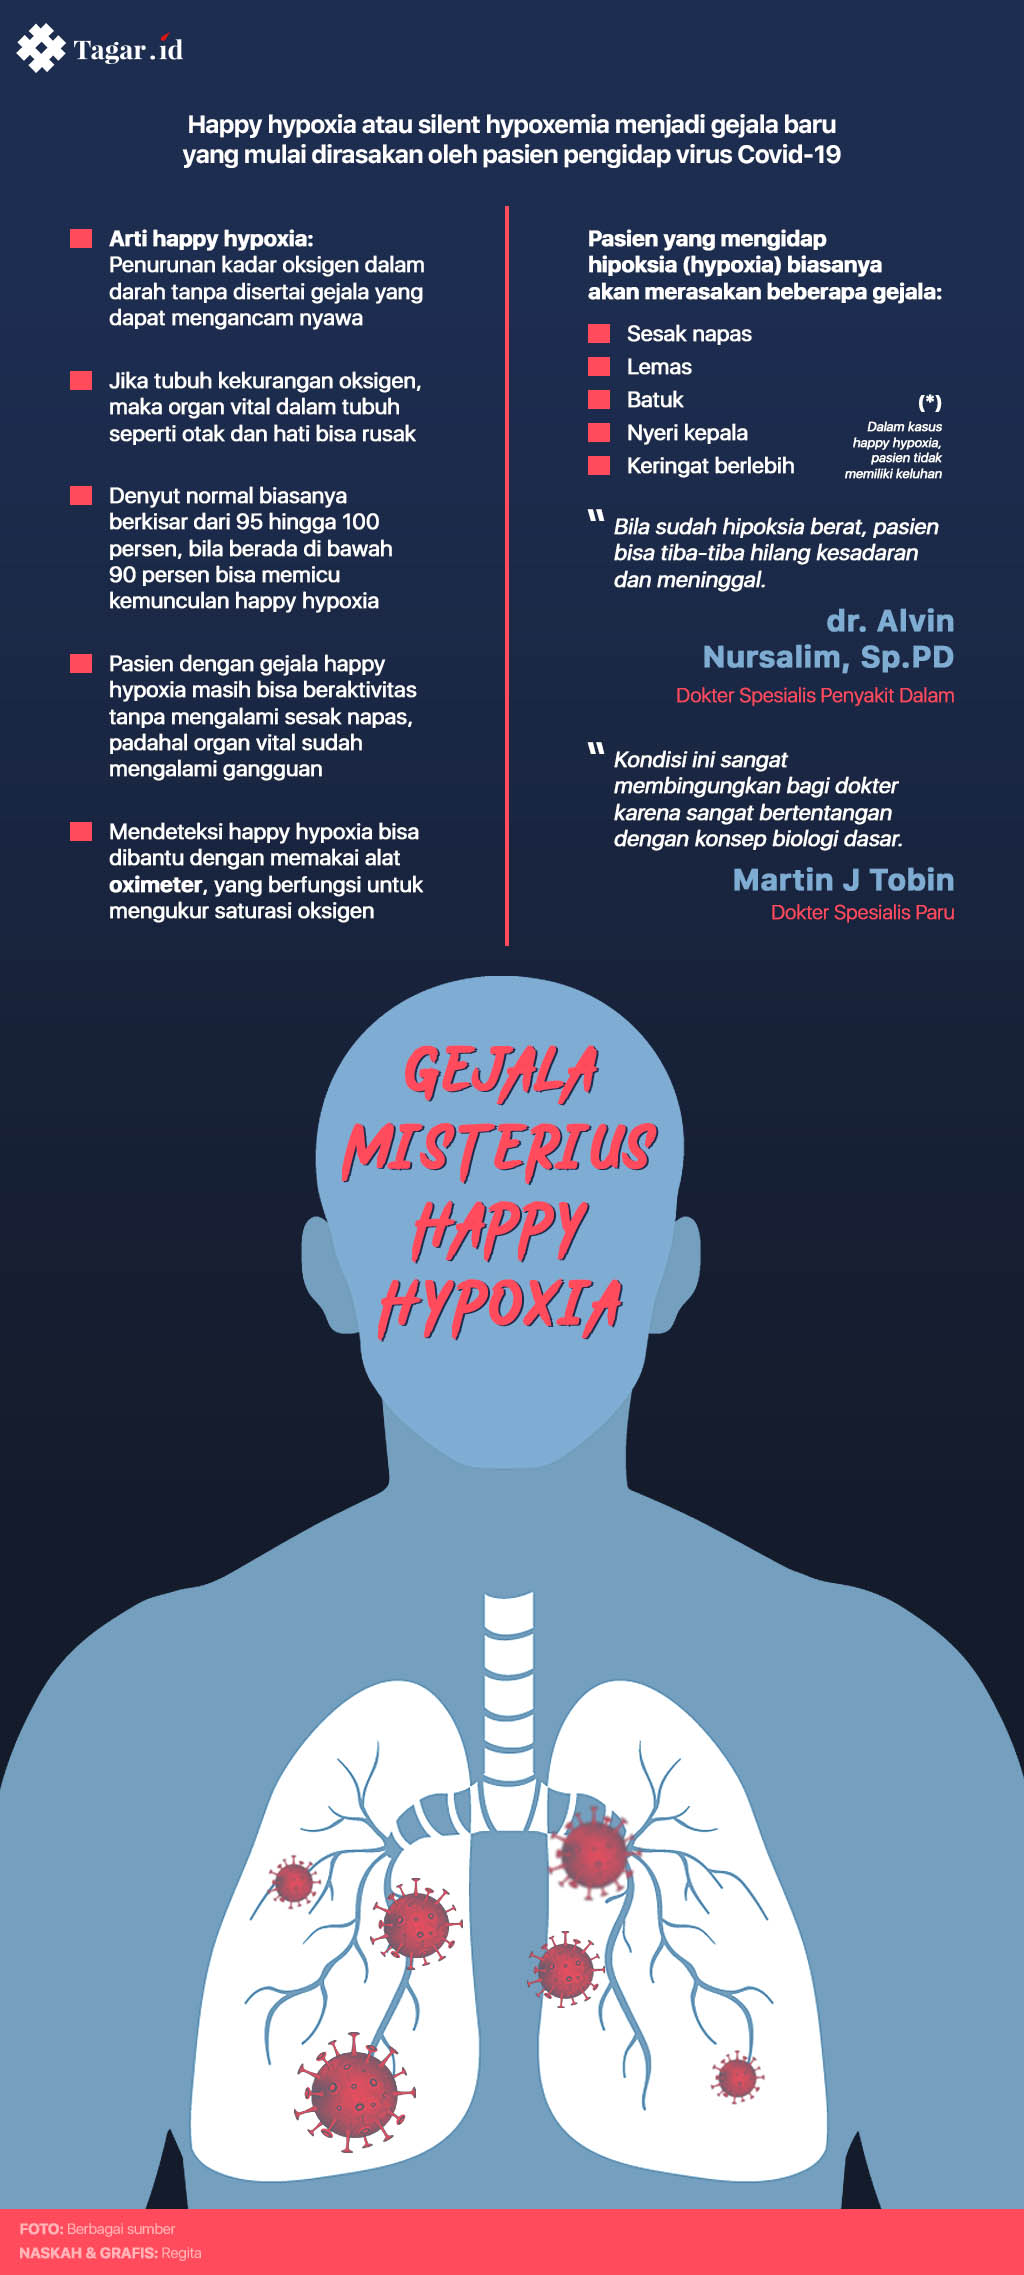 Infografis: Gejala Misterius Happy Hypoxia